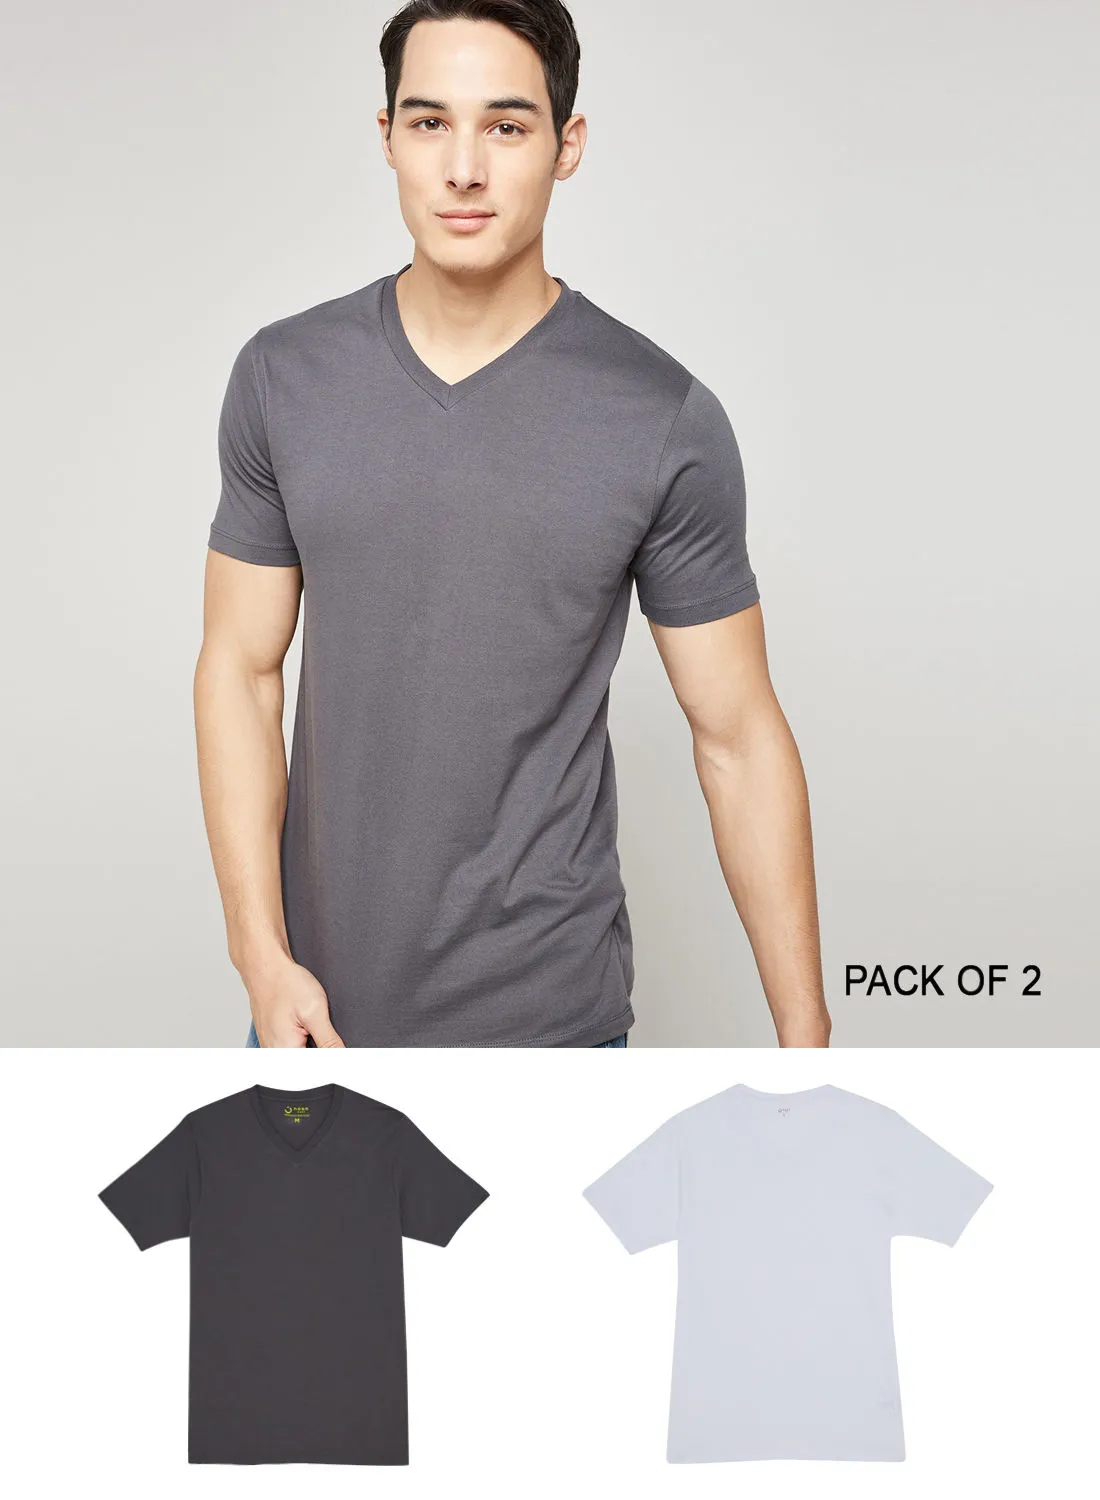 Noon East V-Neck T-Shirt, Pack Of 2, 100% Cotton, Comfort Fit Dark Grey/ White Wash